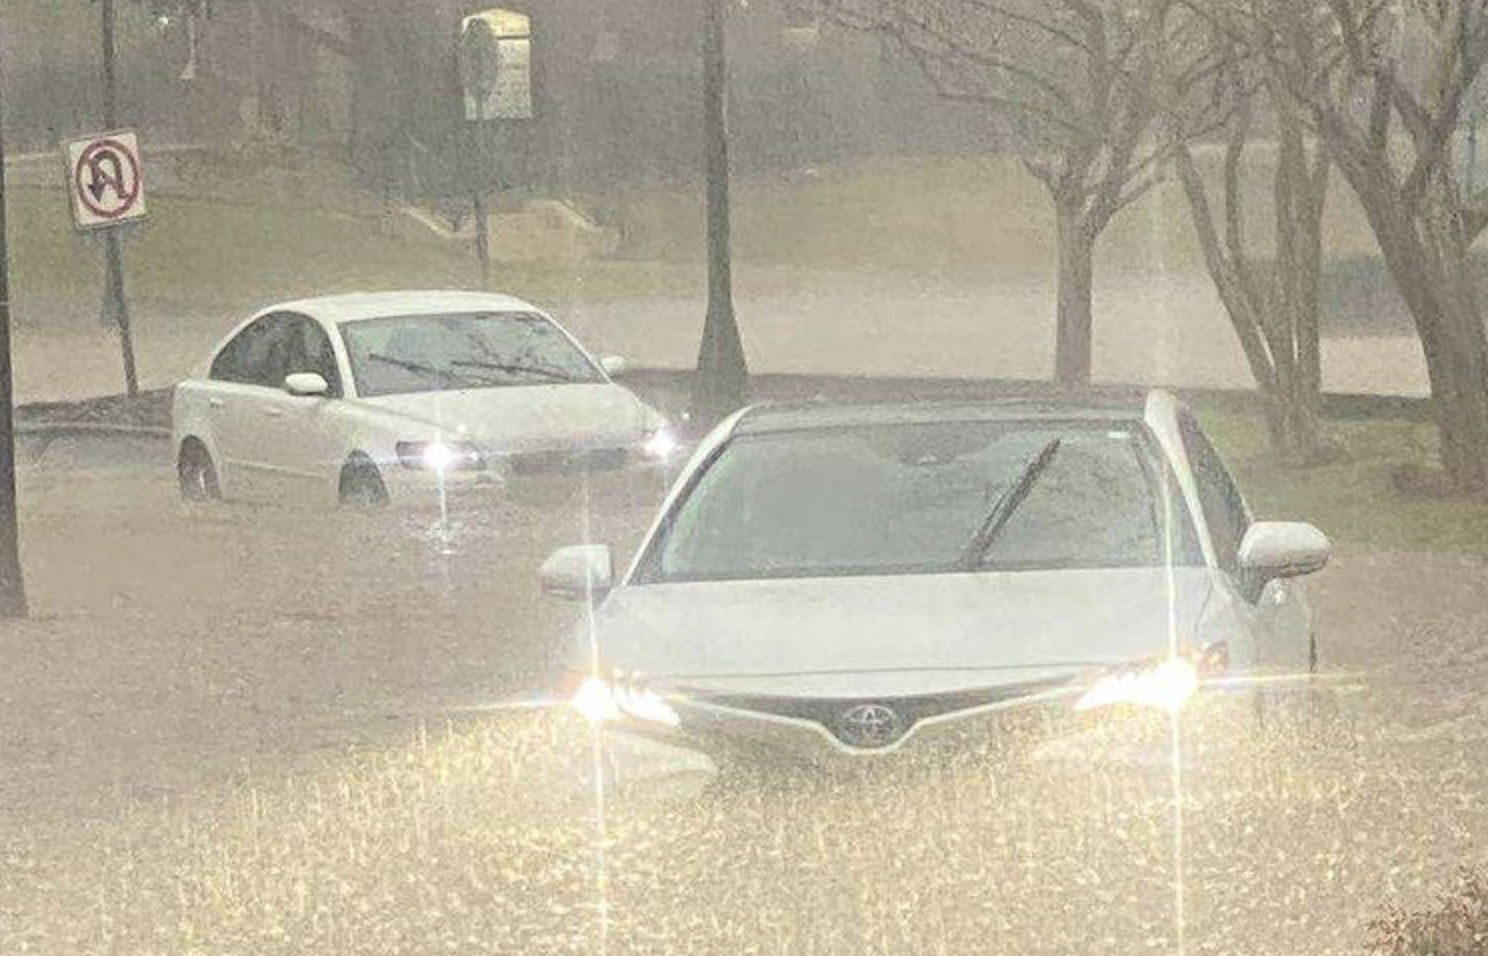 Breaking: Flooding strikes downtown Birmingham